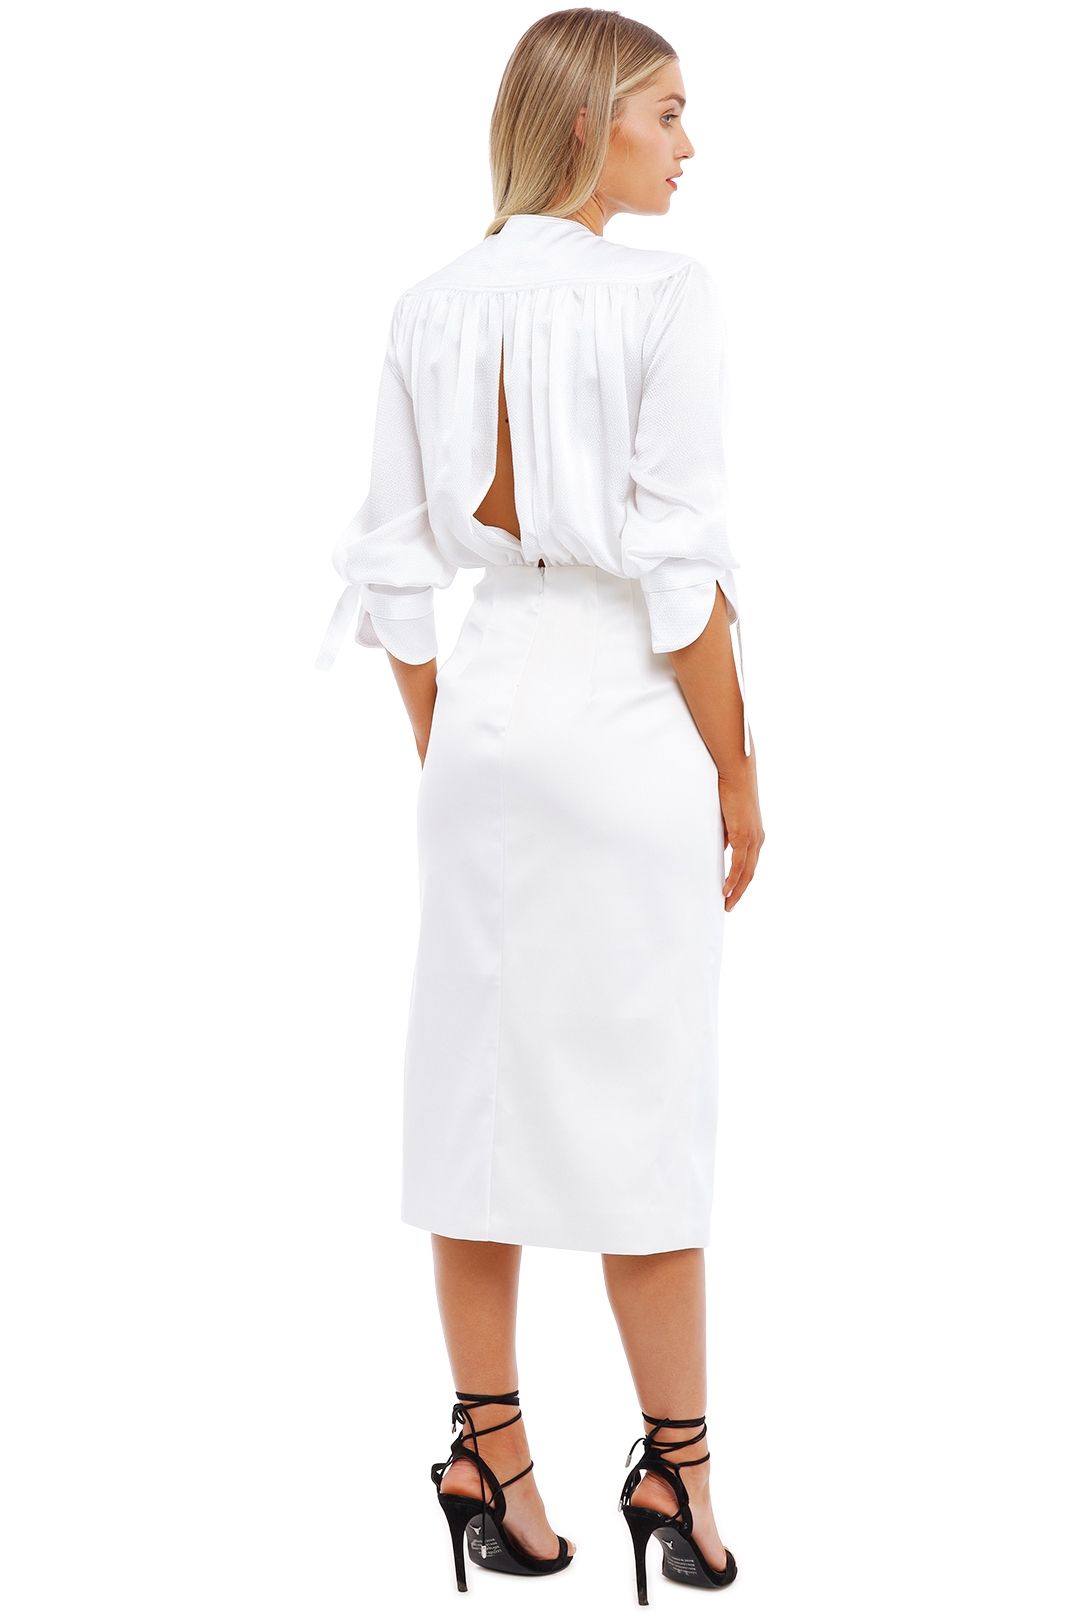 Nicola Finetti Arida Low Plunge Dress White slit